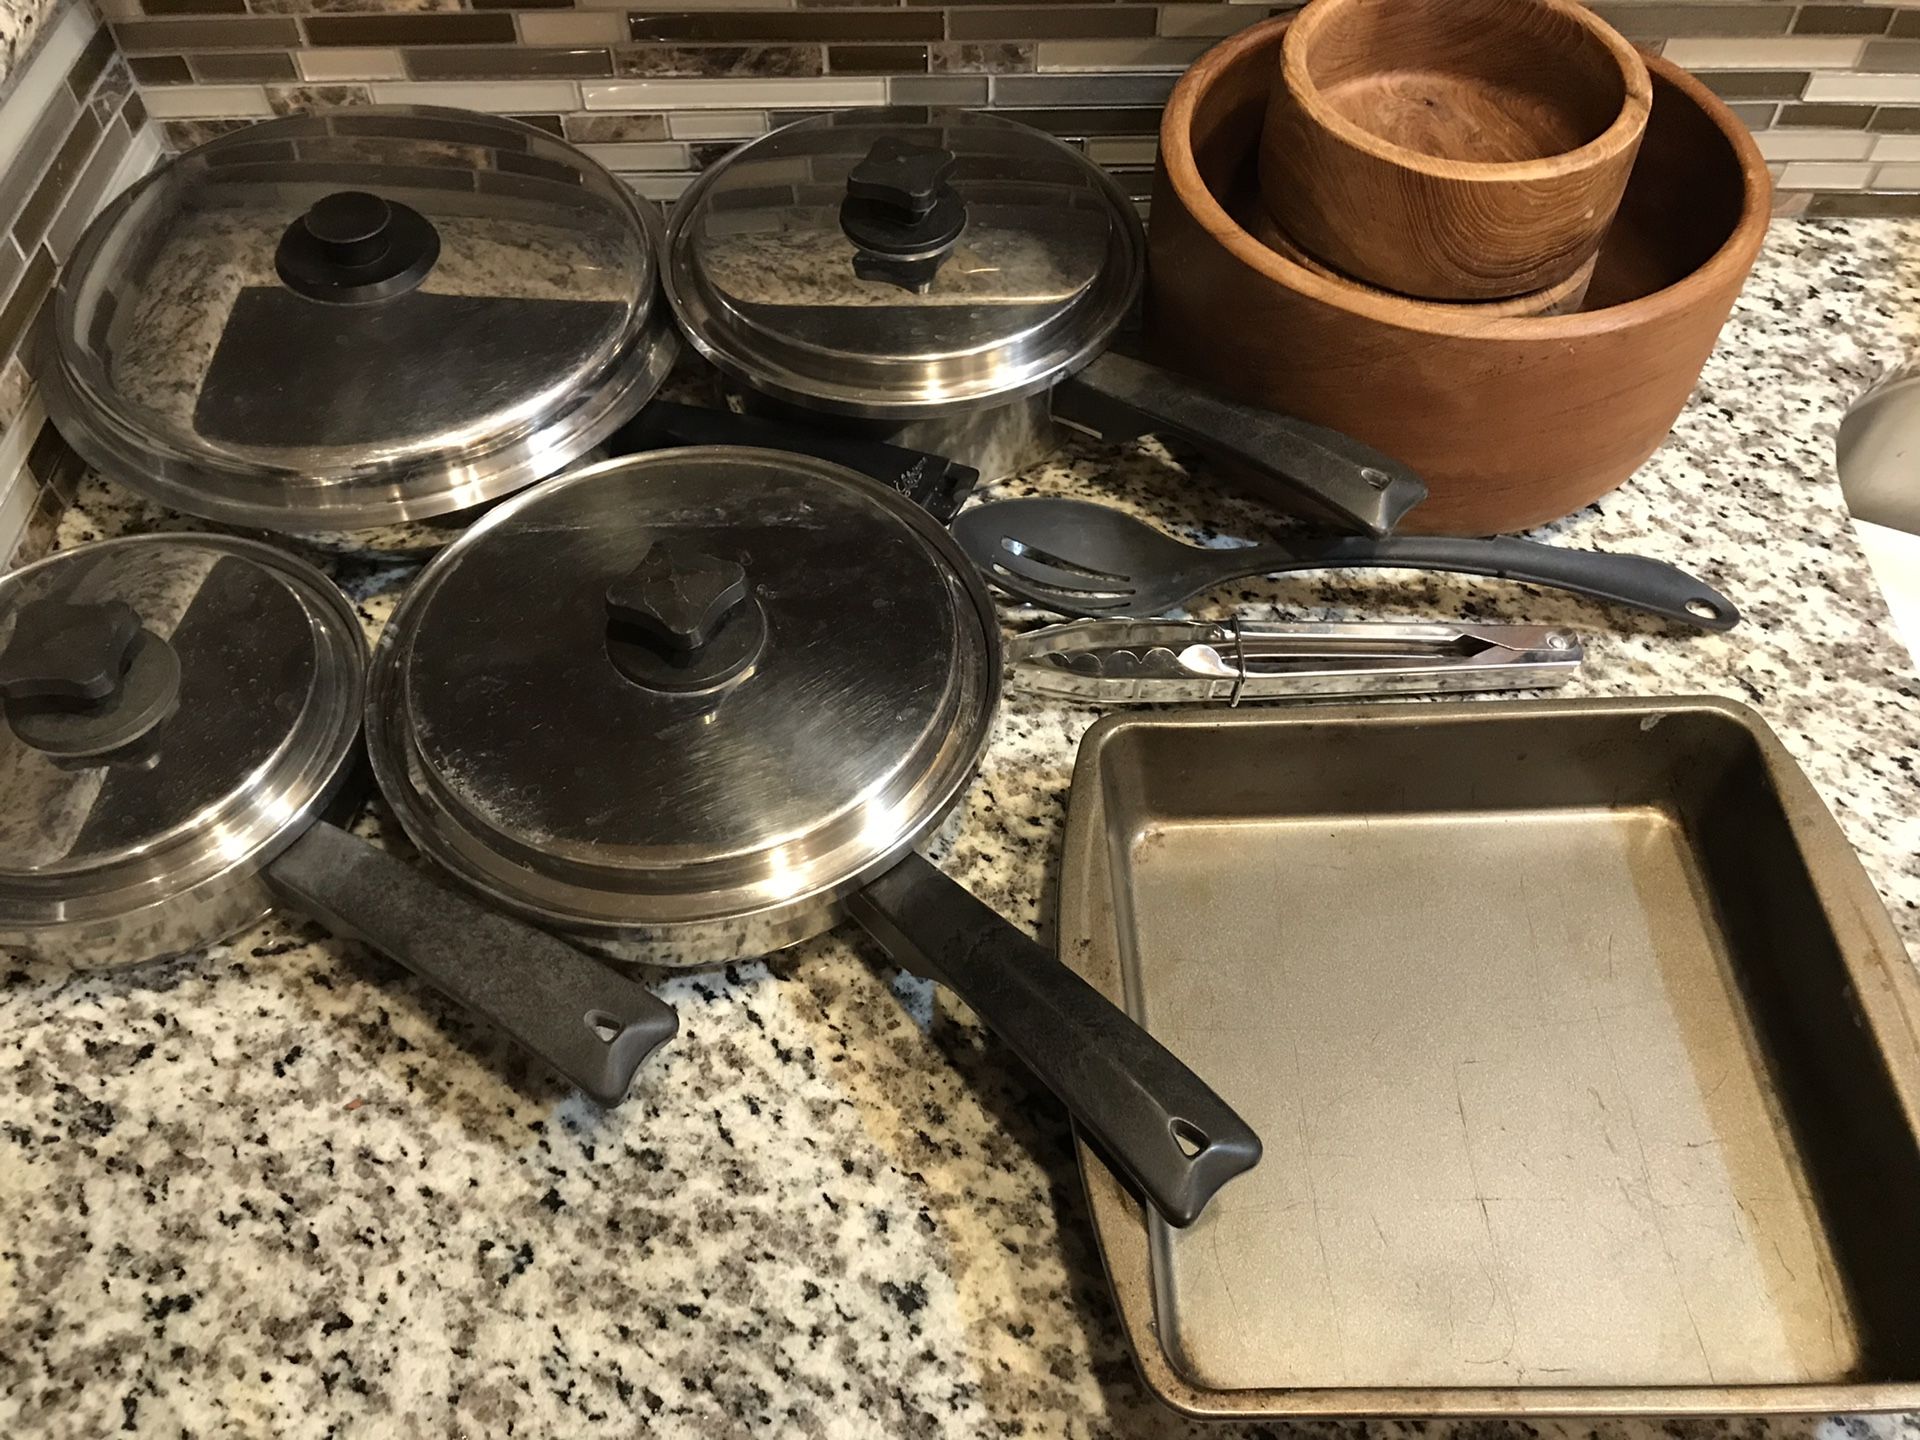 Pots, Pans, and Bowls